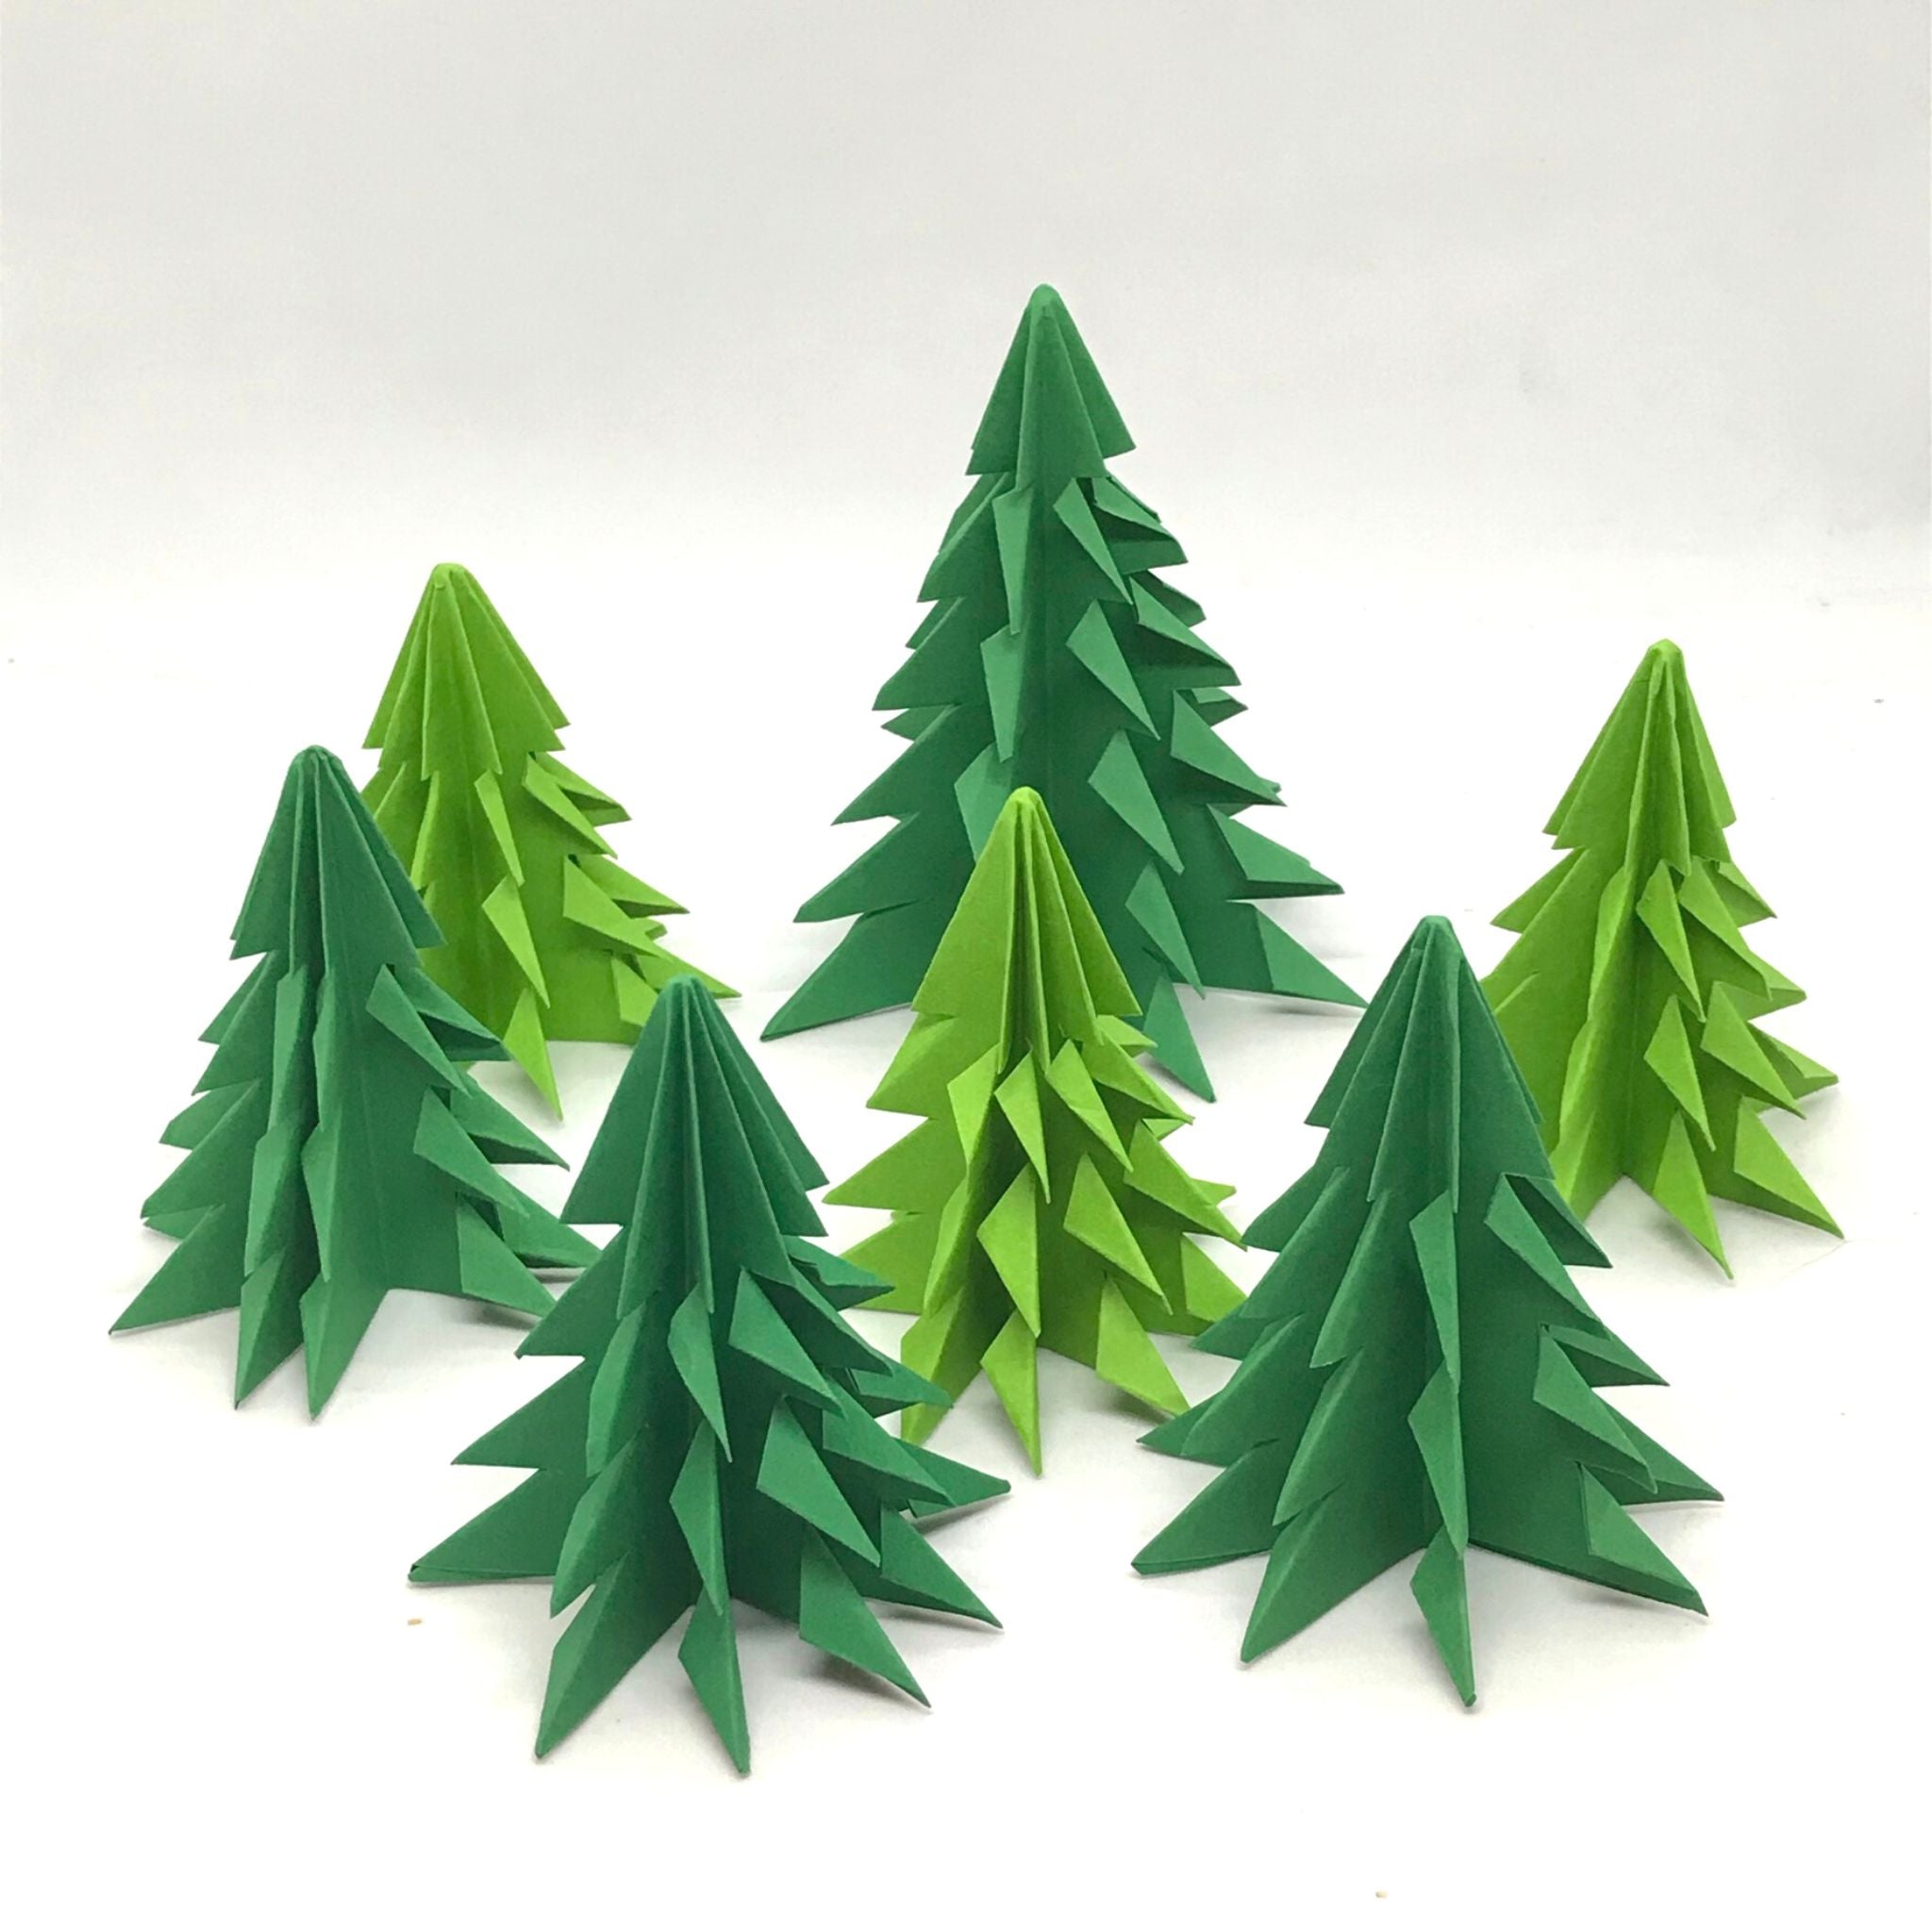 How To Make Origami Christmas Tree? – Origami World